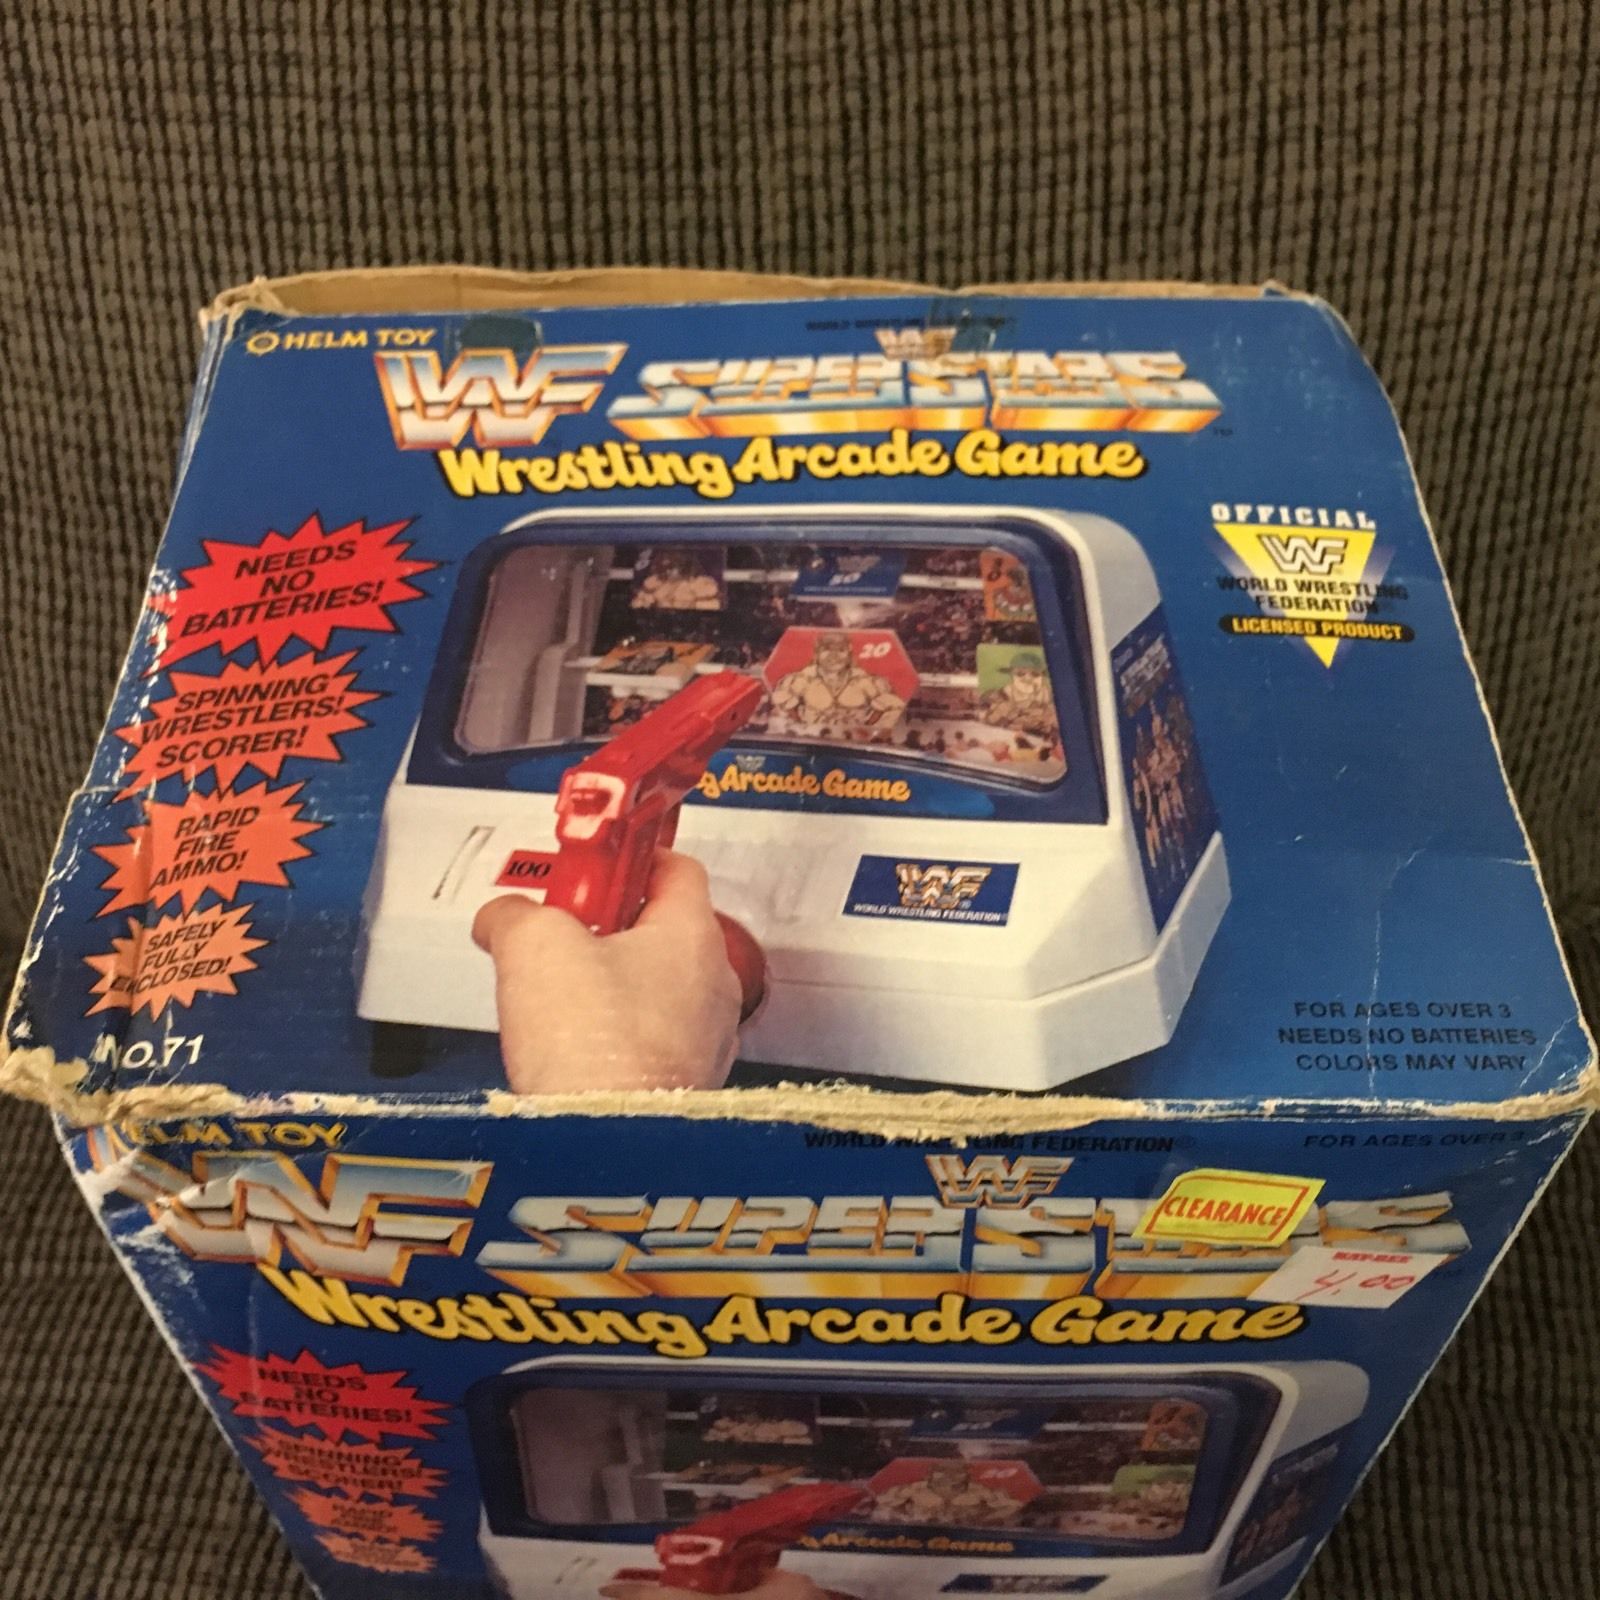 WWF Superstars Wrestling Arcade Game toy 3